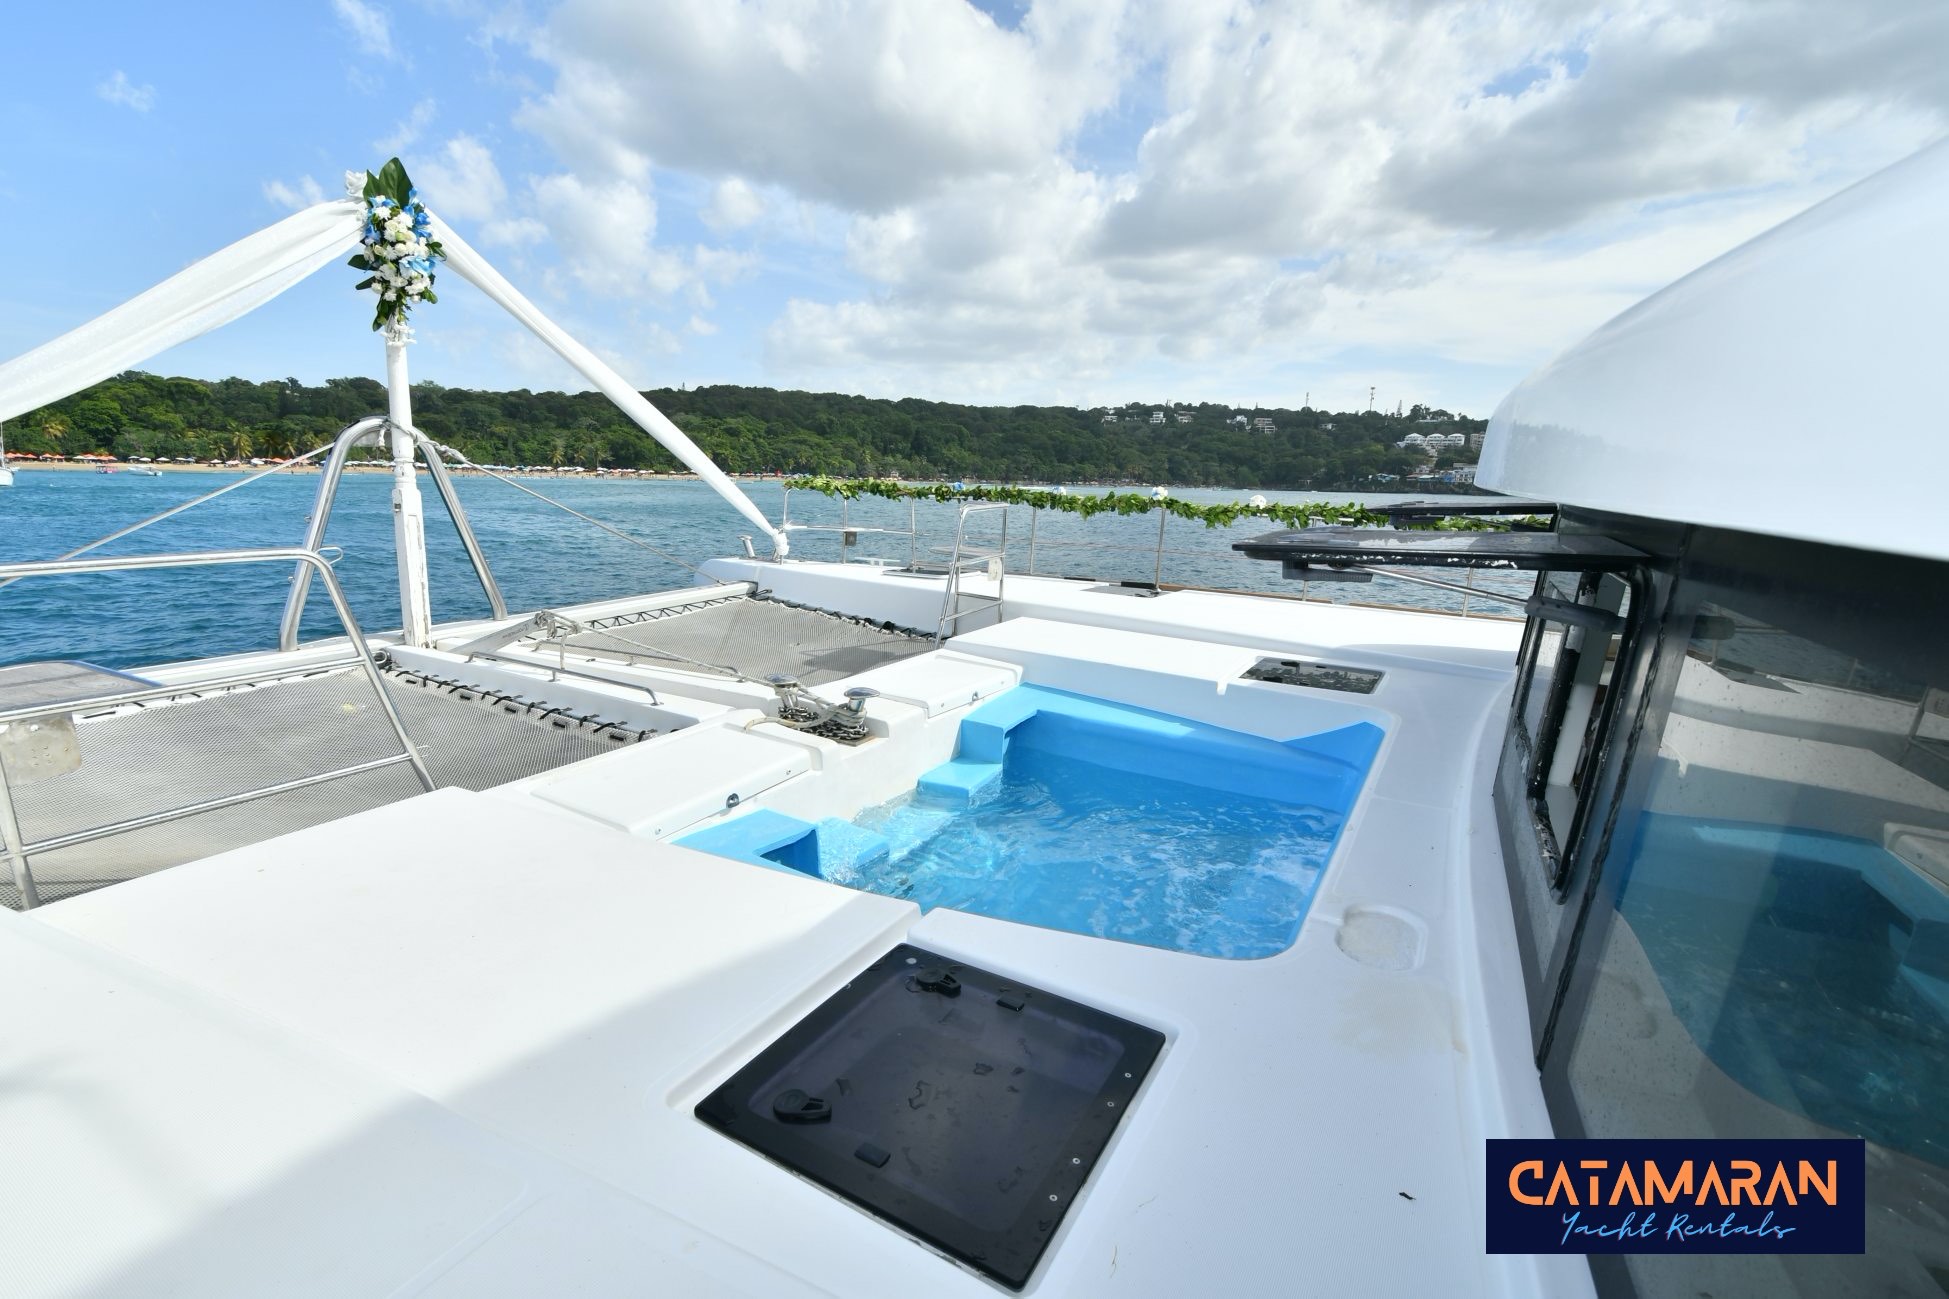 The outdoor Jacuzzi of the sosua catamaran charter